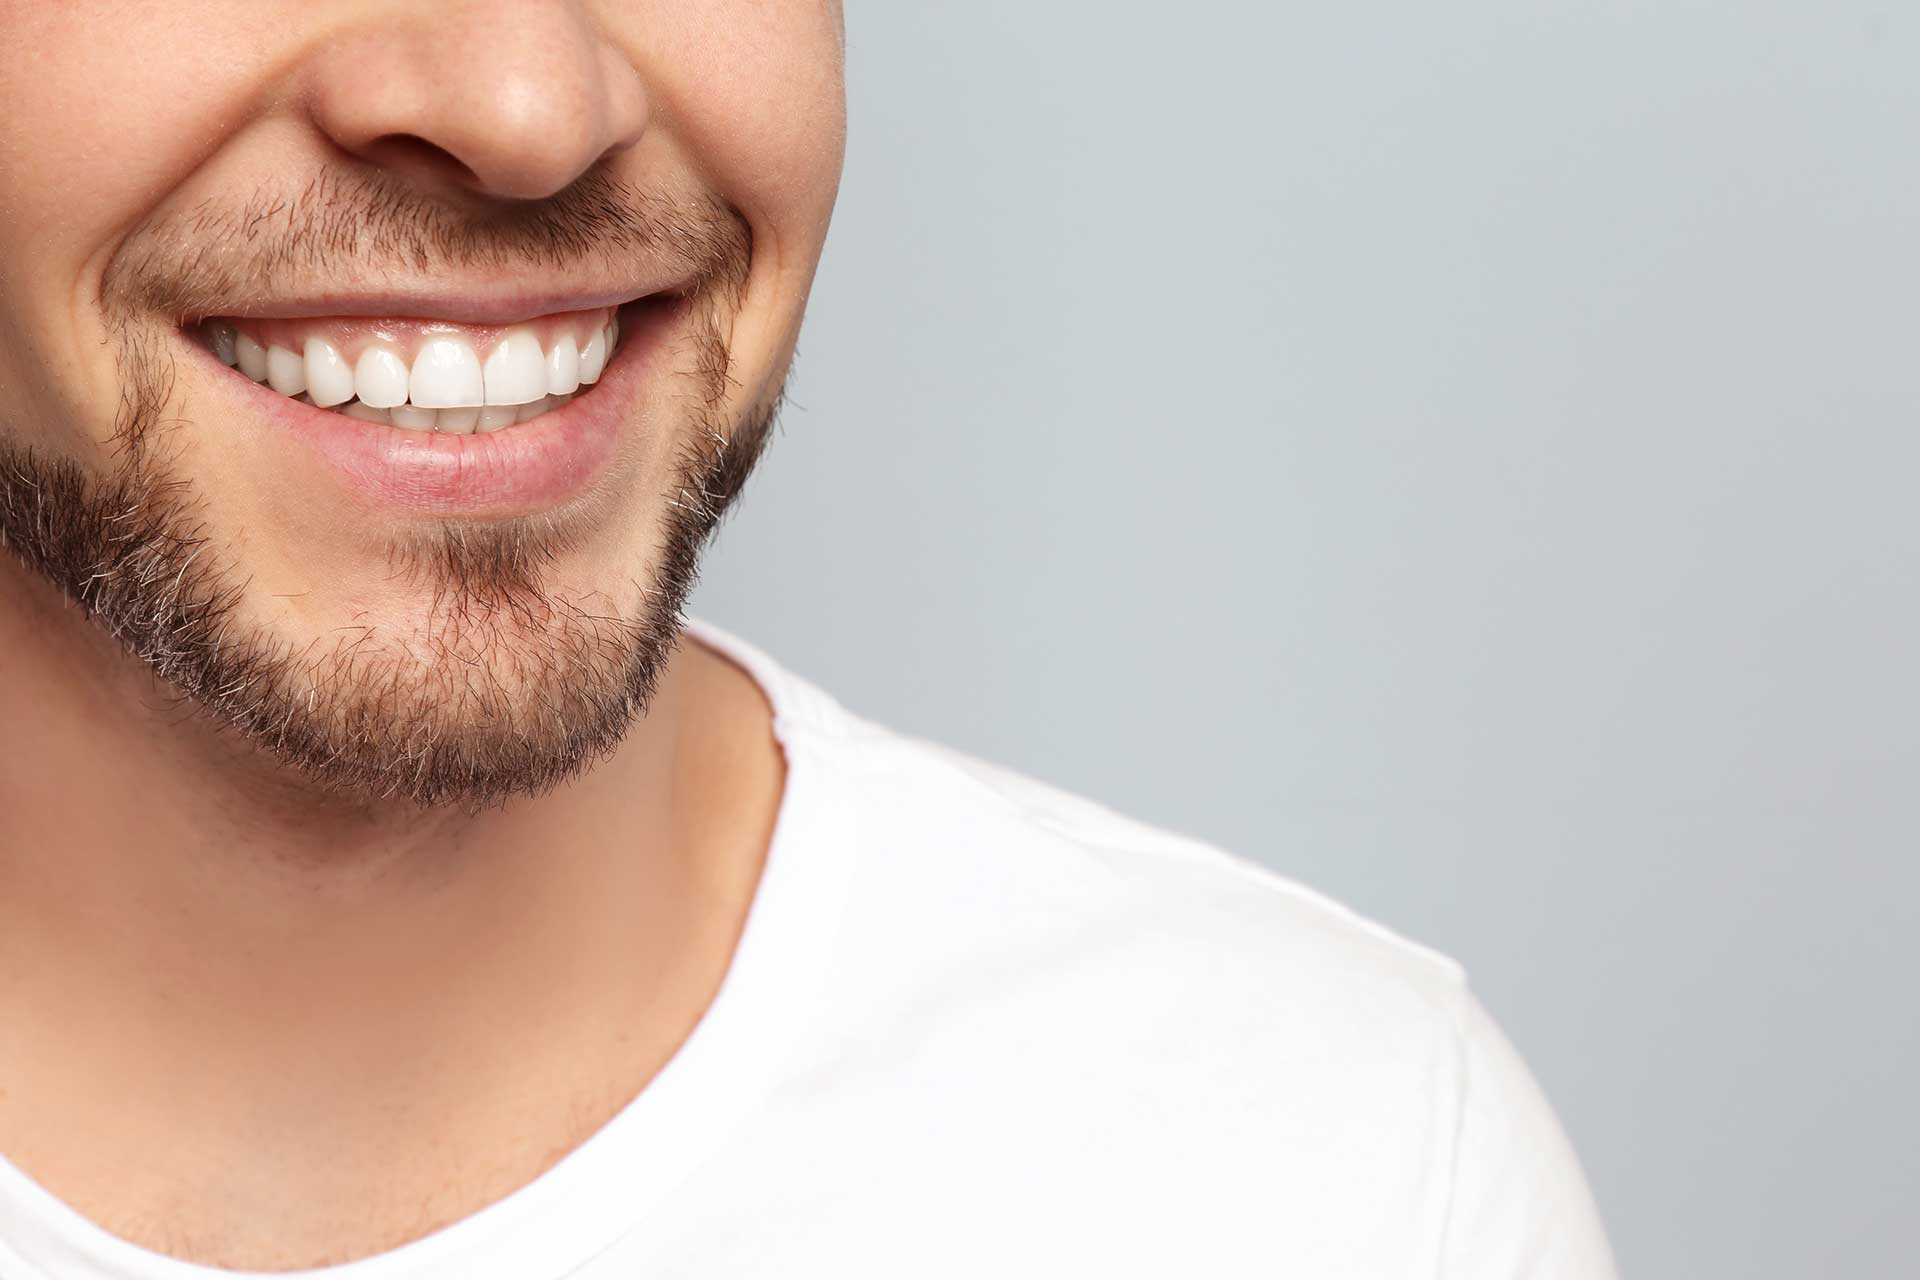 Practical Tips for Healthy Teeth